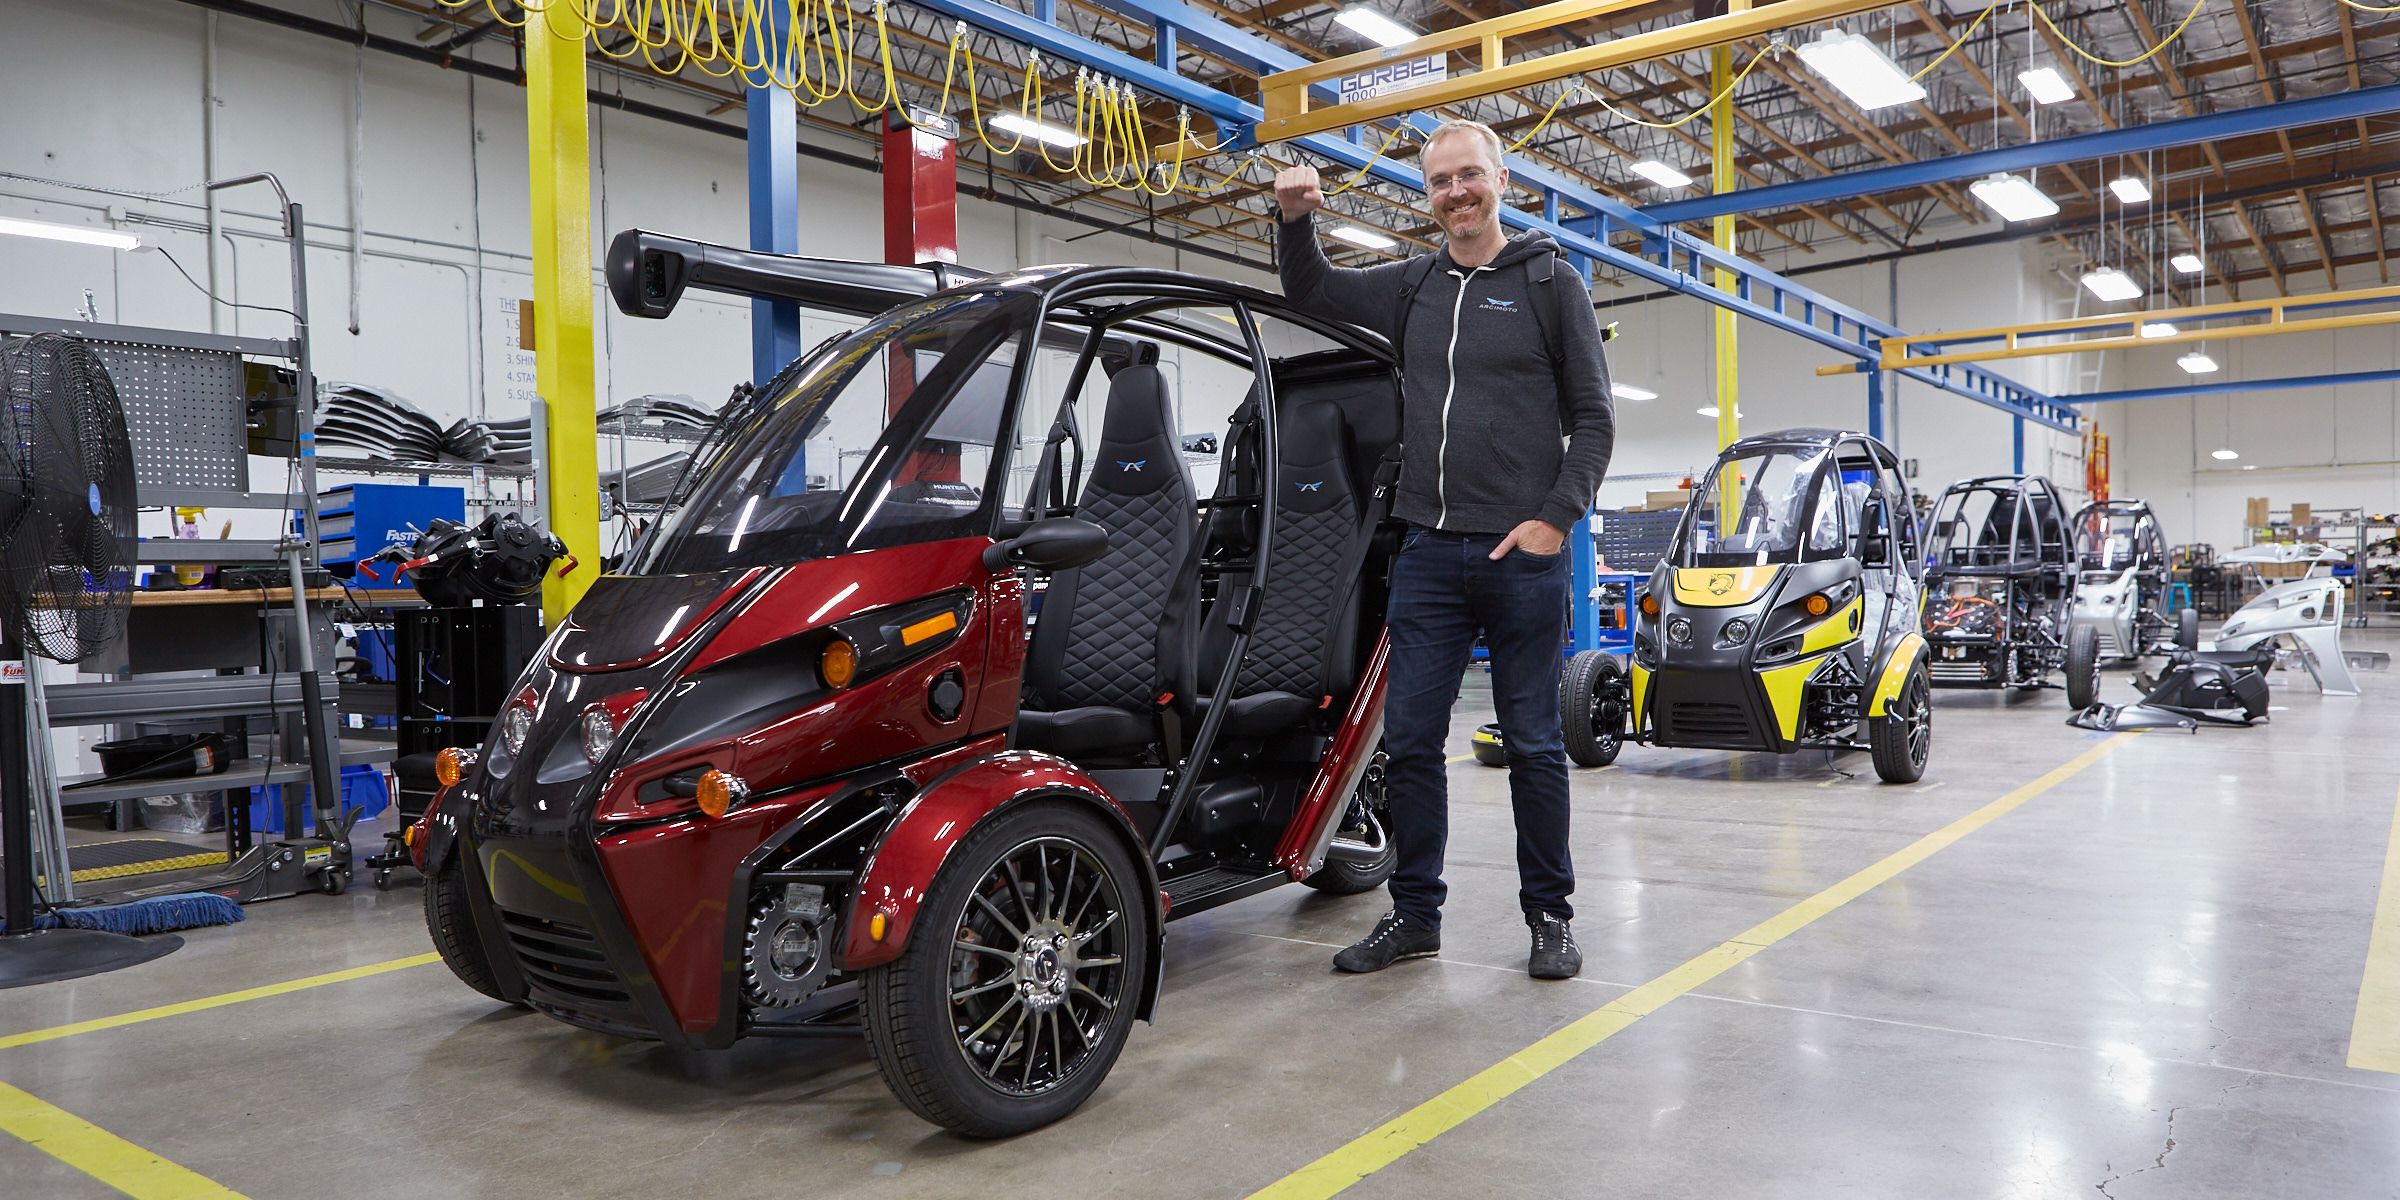 Arcimoto's USbuilt, 3wheeled electric car prepares to go global